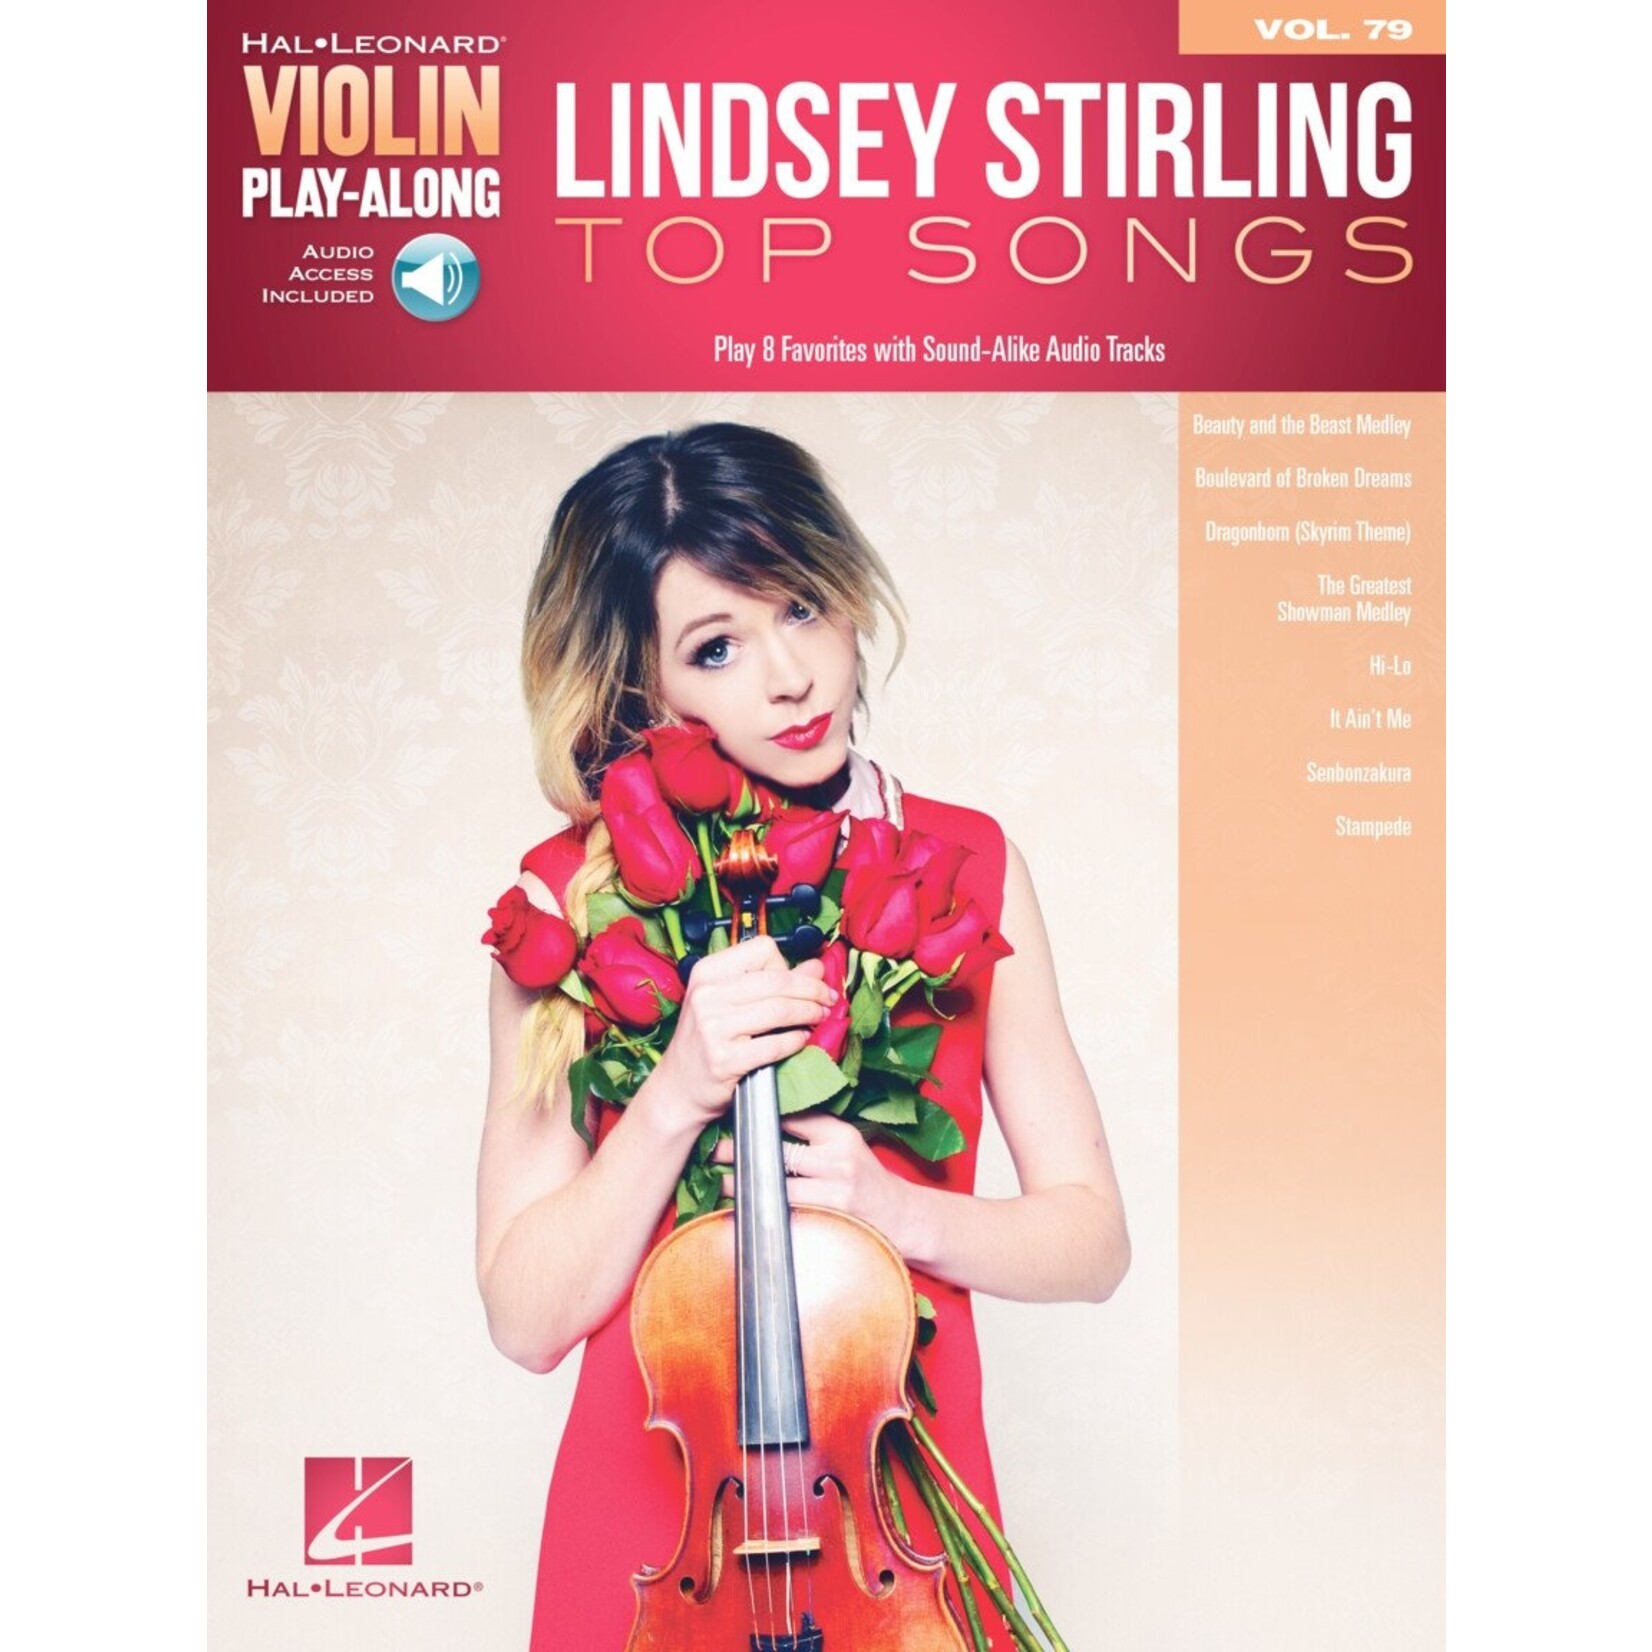 Lindsey Stirling Top Songs Violin Play-Along Volume 79